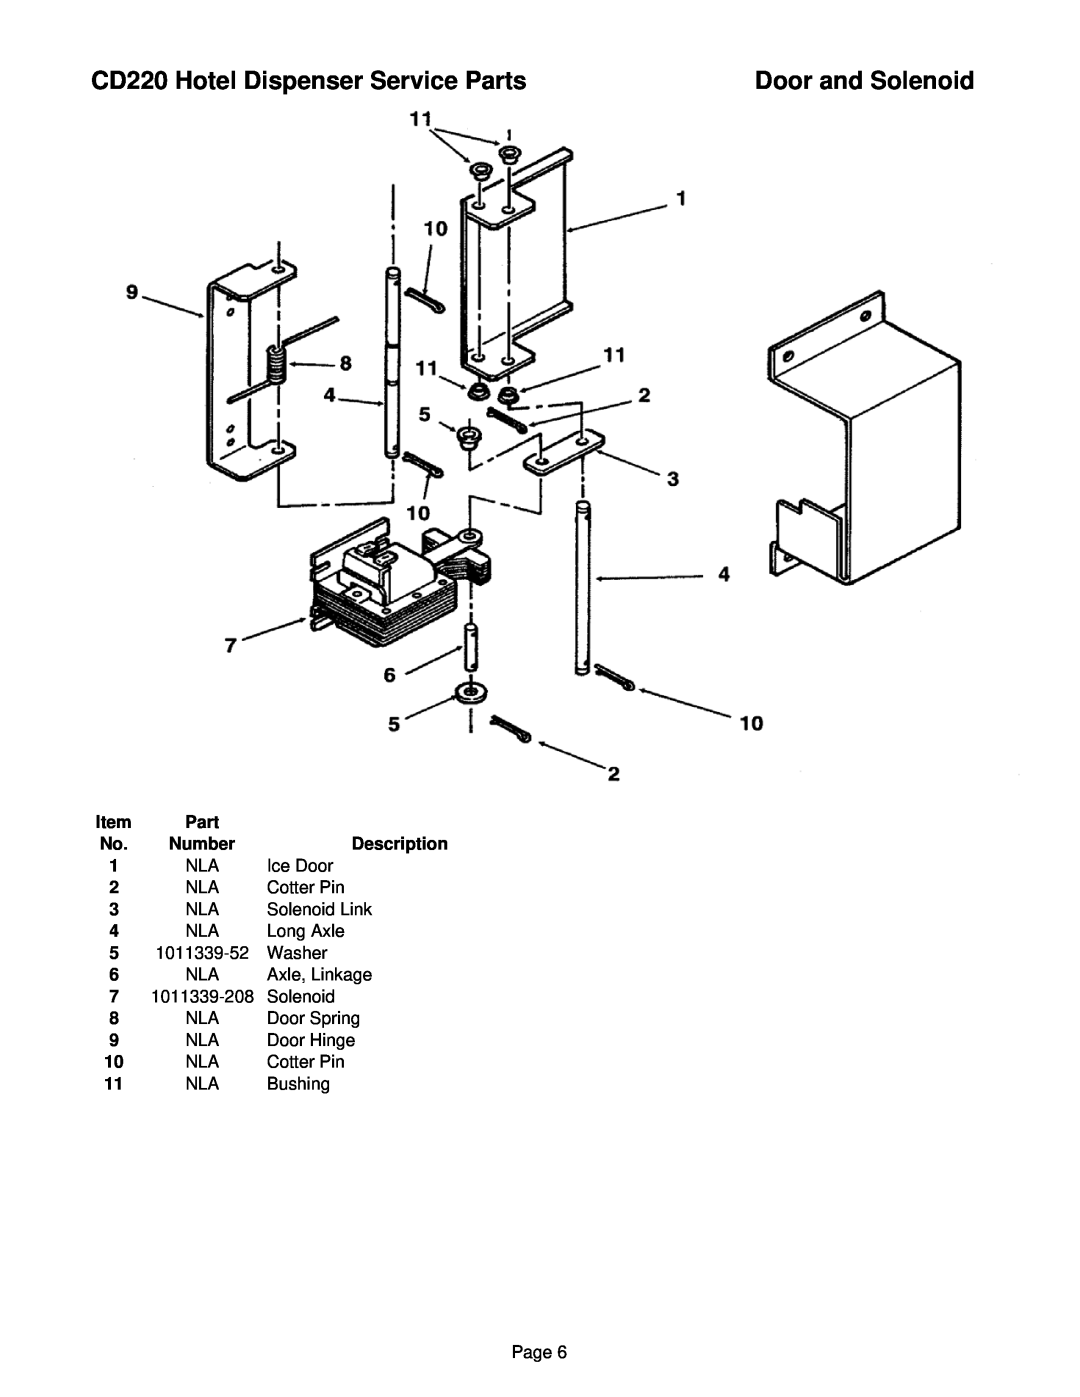 Ice-O-Matic manual Door and Solenoid, CD220 Hotel Dispenser Service Parts, Number, Description, Ice Door, Cotter Pin 